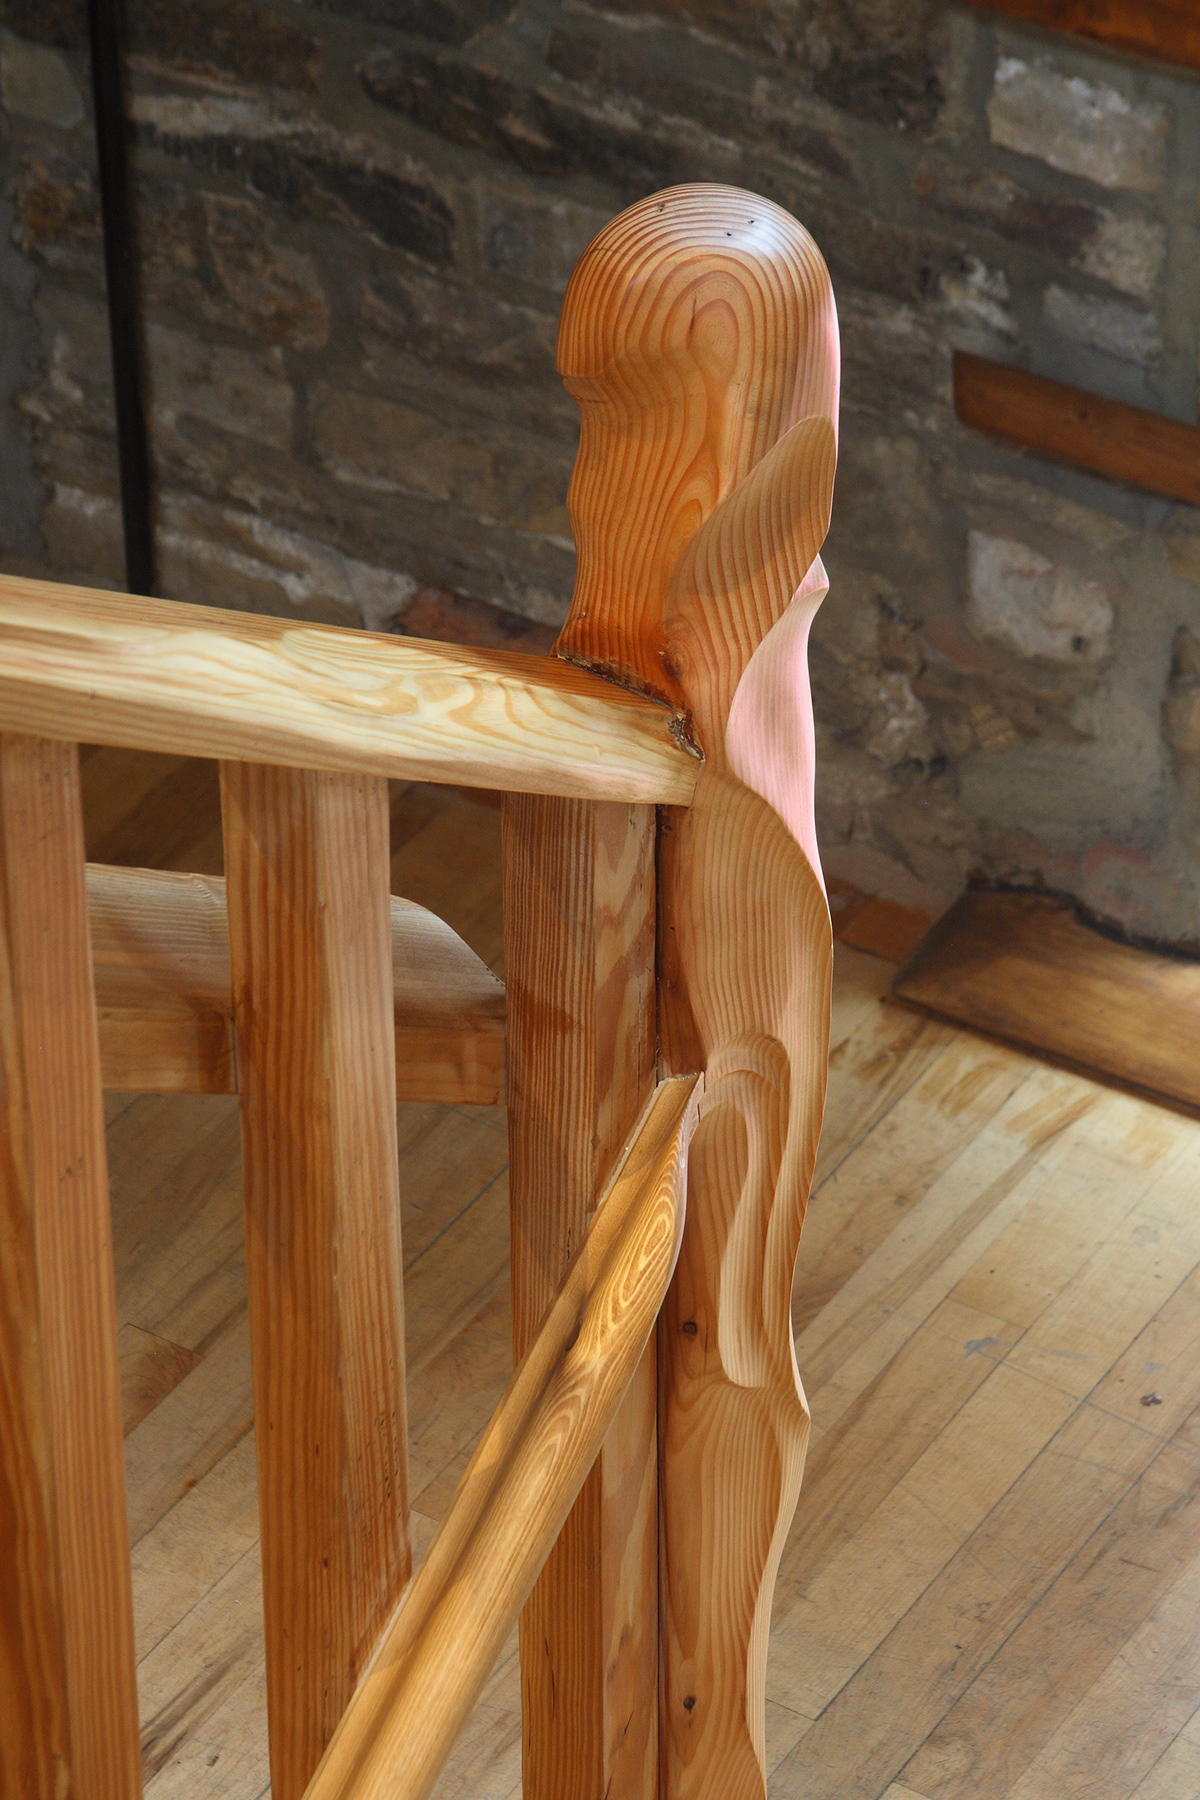 jam leeds carving wood pine art creative Headingley